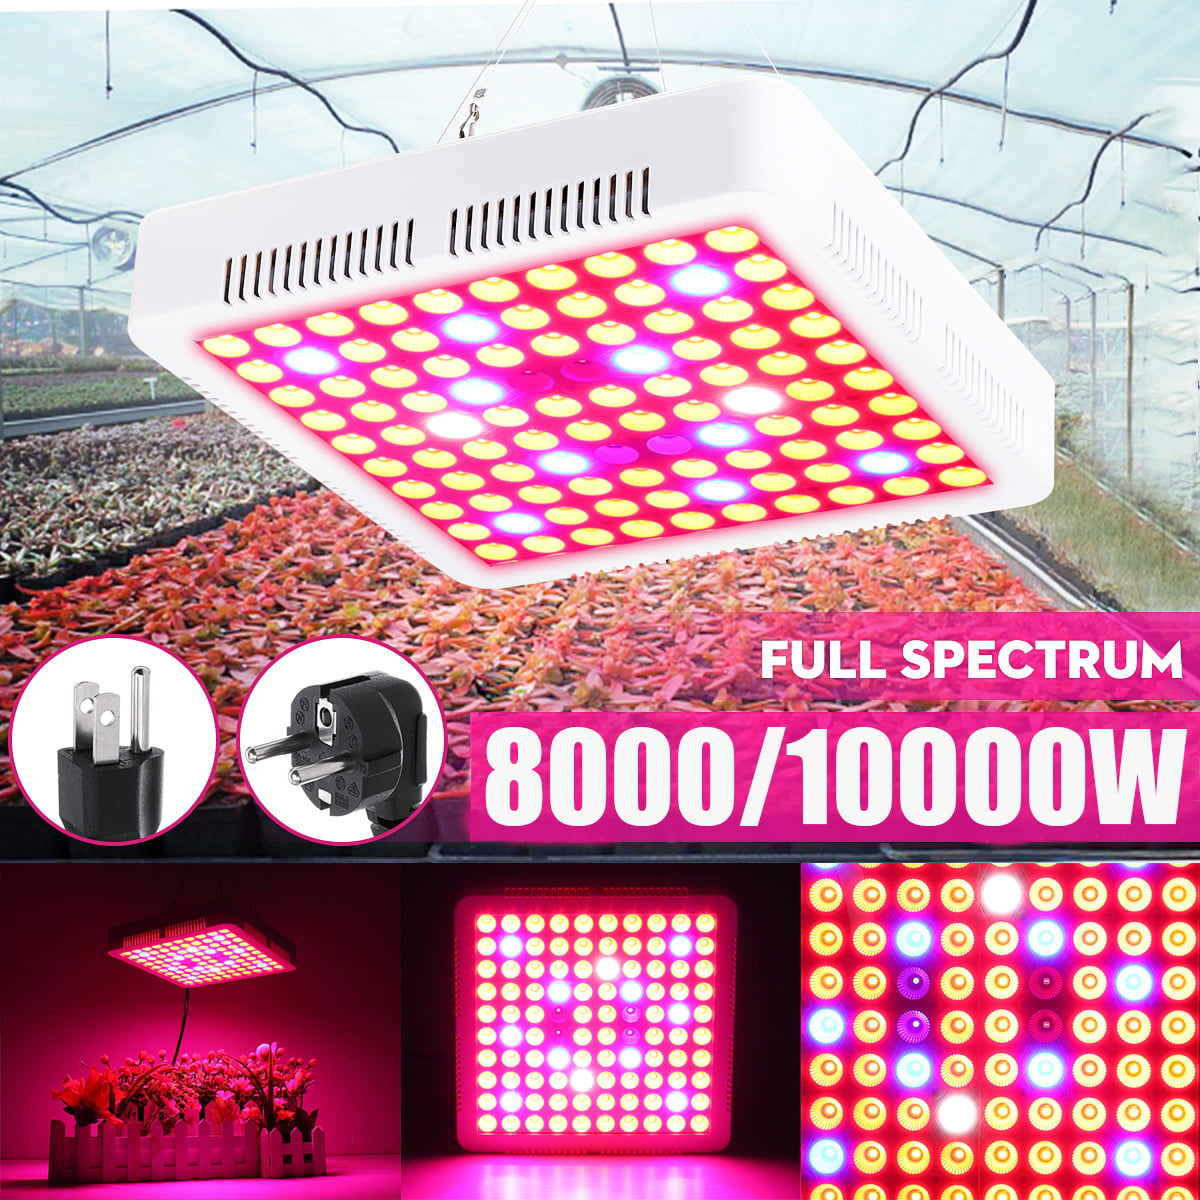 Details about   8000W LED Grow Light Full Spectrum Indoor Hydroponic Veg Flower Plant Lamp Panel 